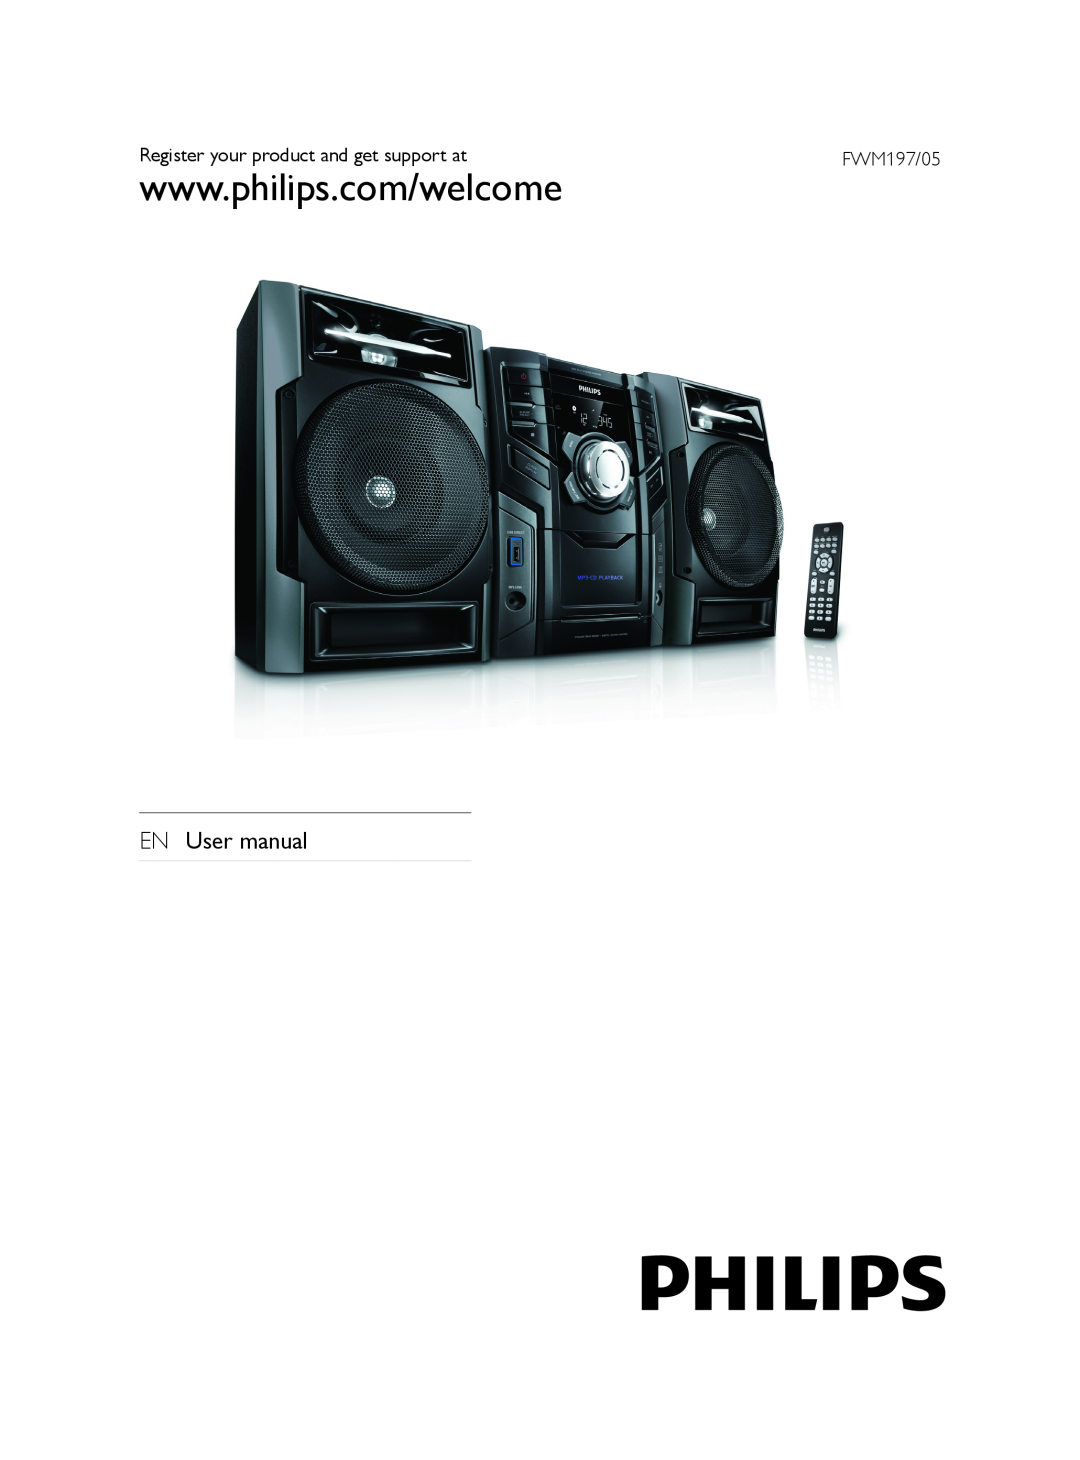 Philips FWM197/05 user manual 